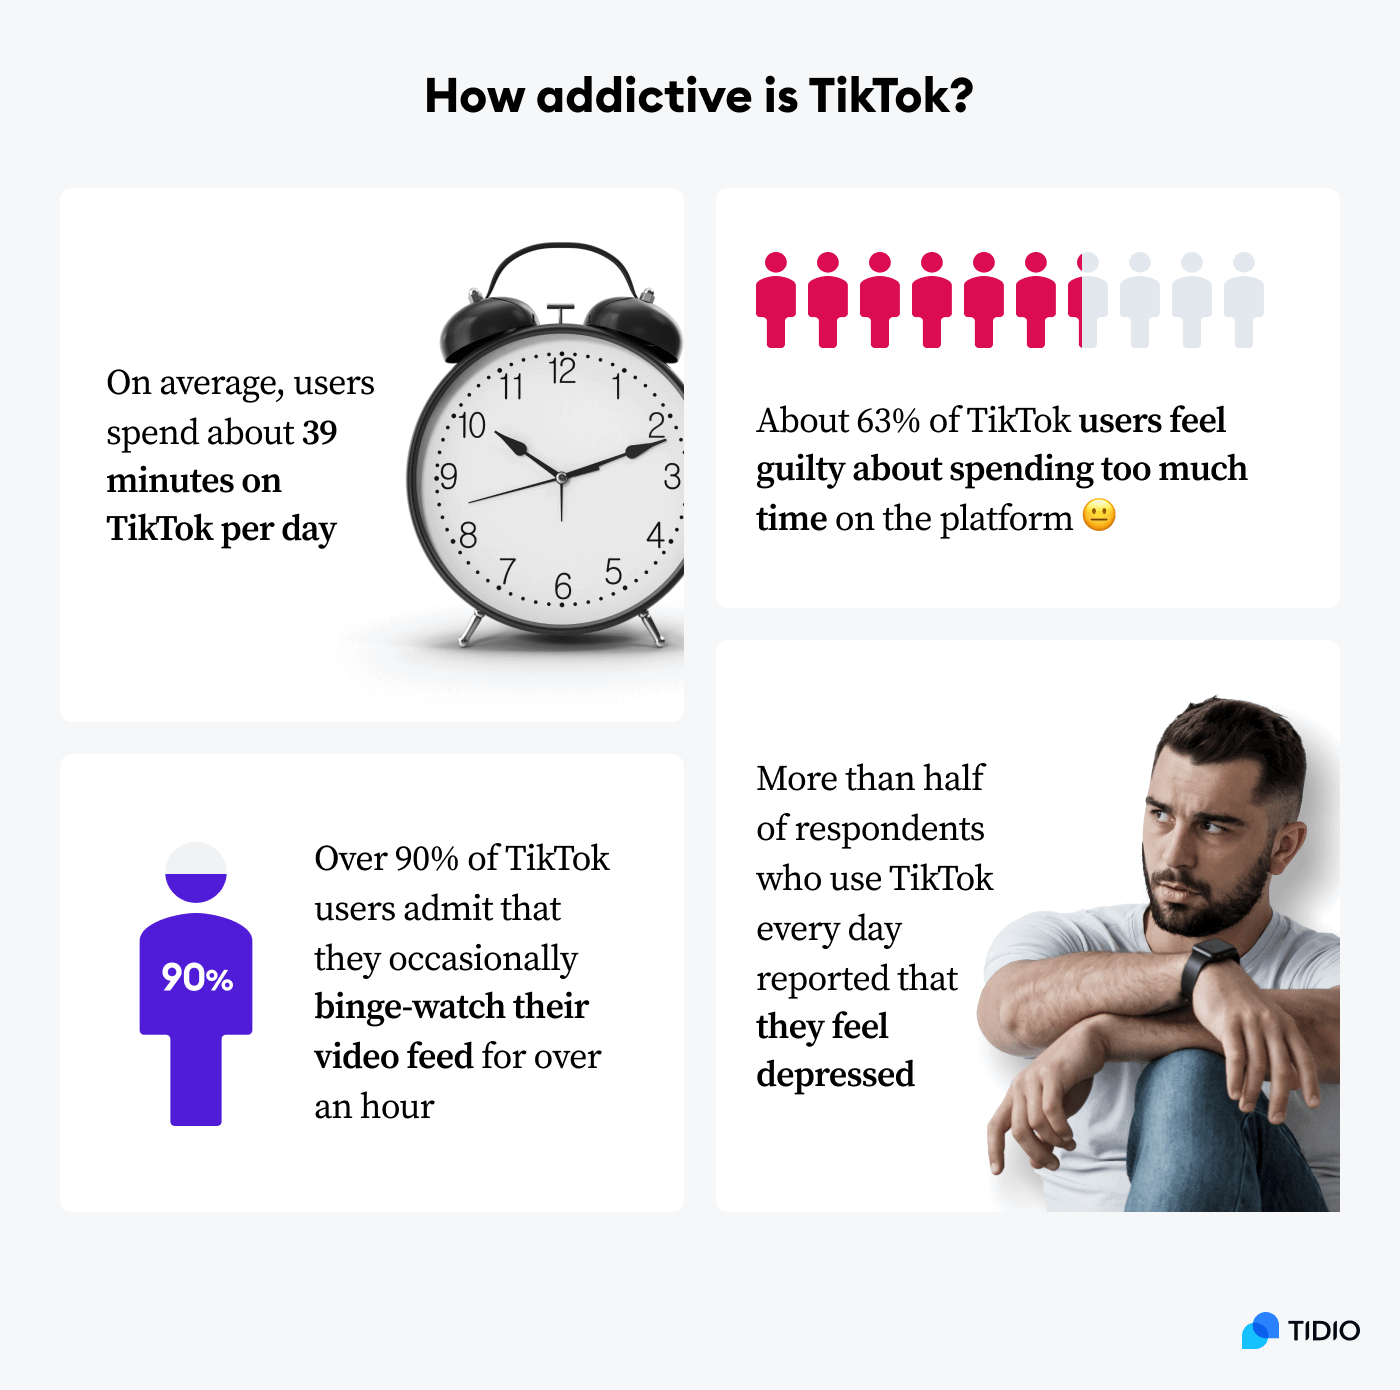 Statistics about how addictive TikTok is